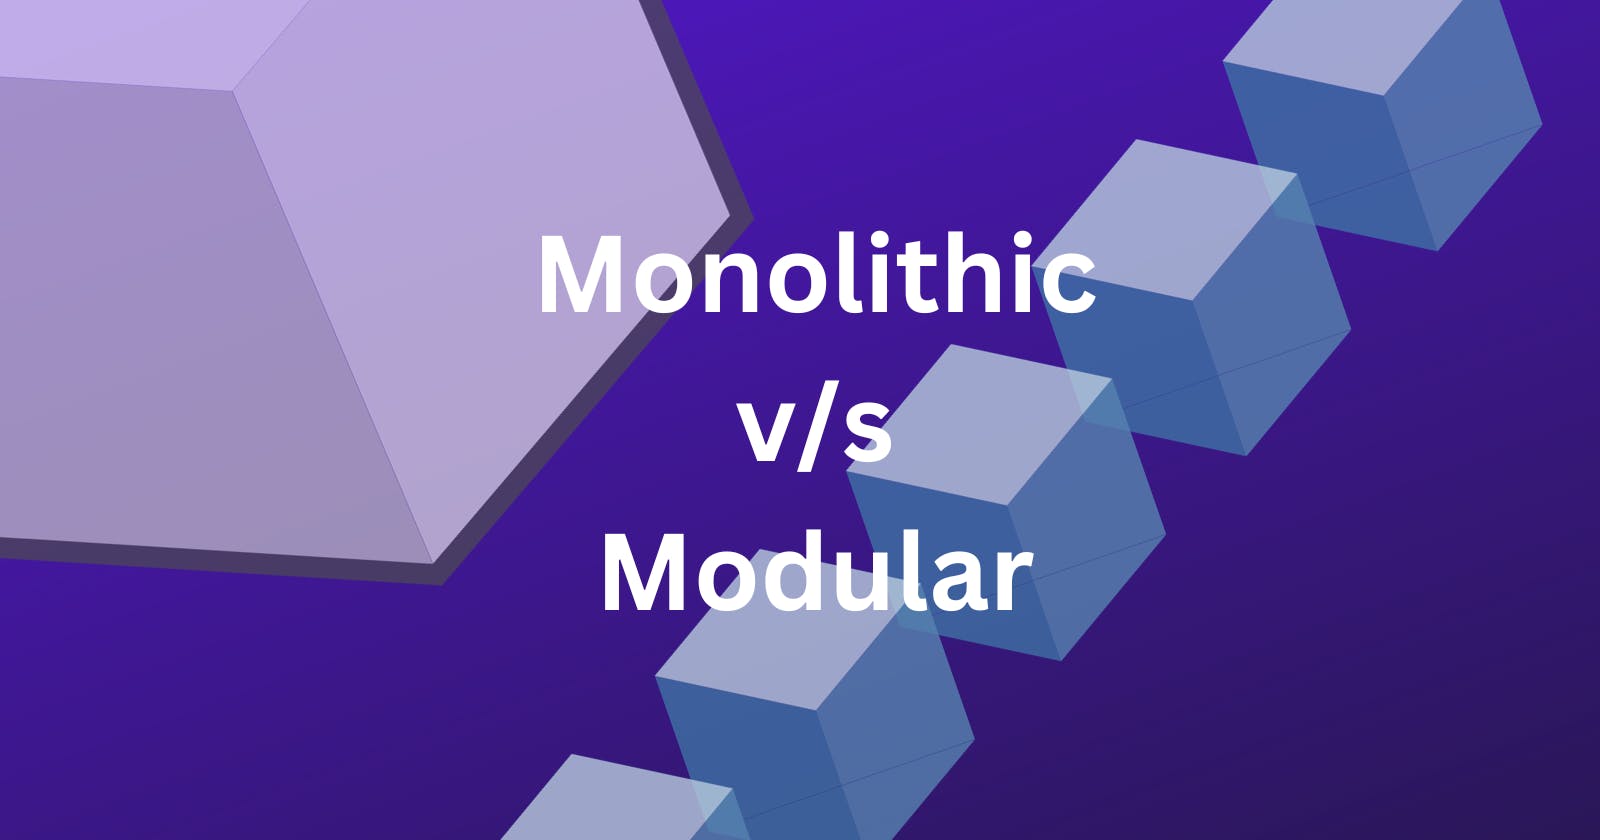 Monolithic and Modular blockchains